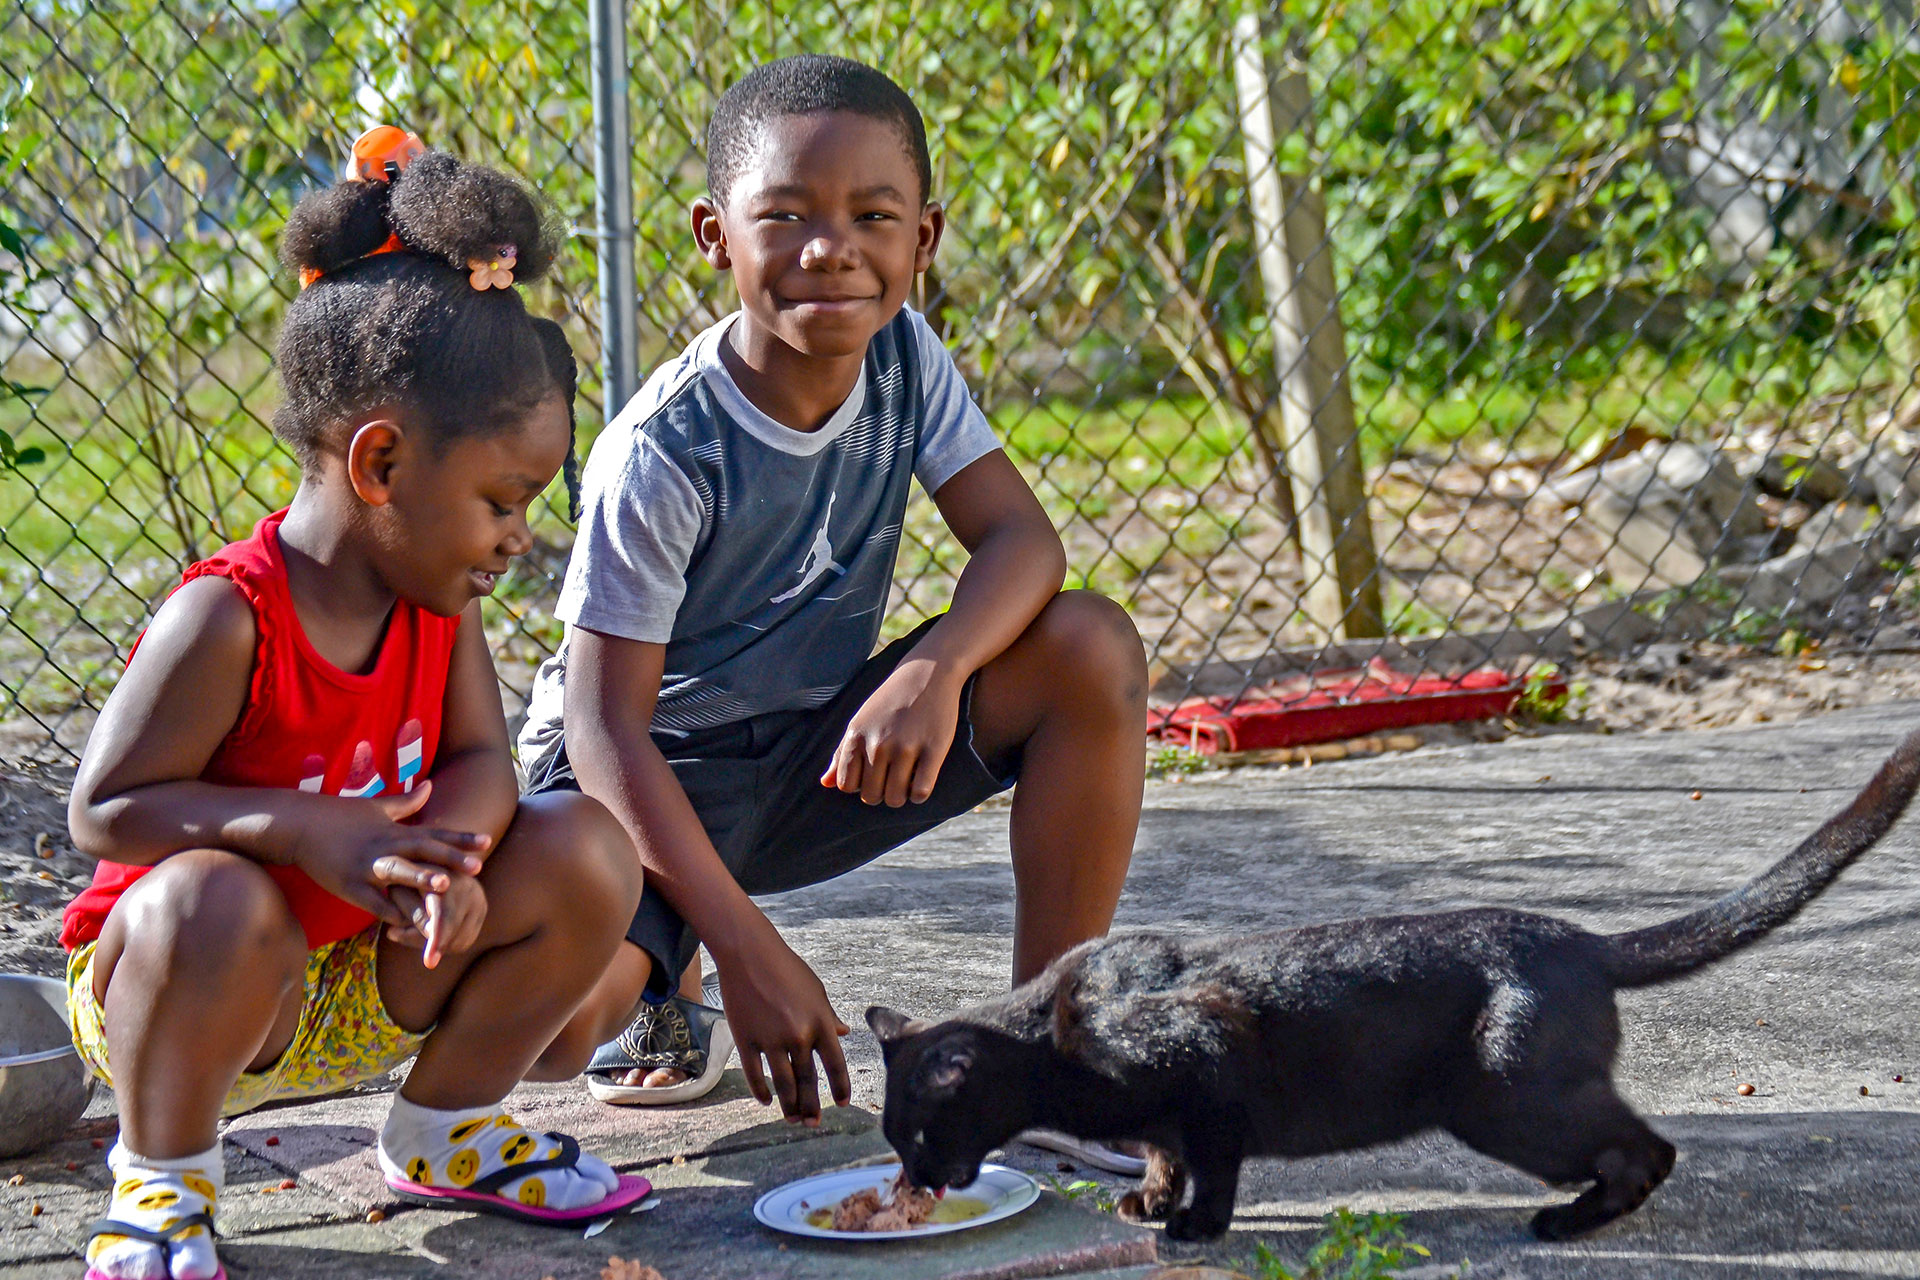 Neveah Edmond, 4, and Edson Edmond, 8, learn humane treatment of animals